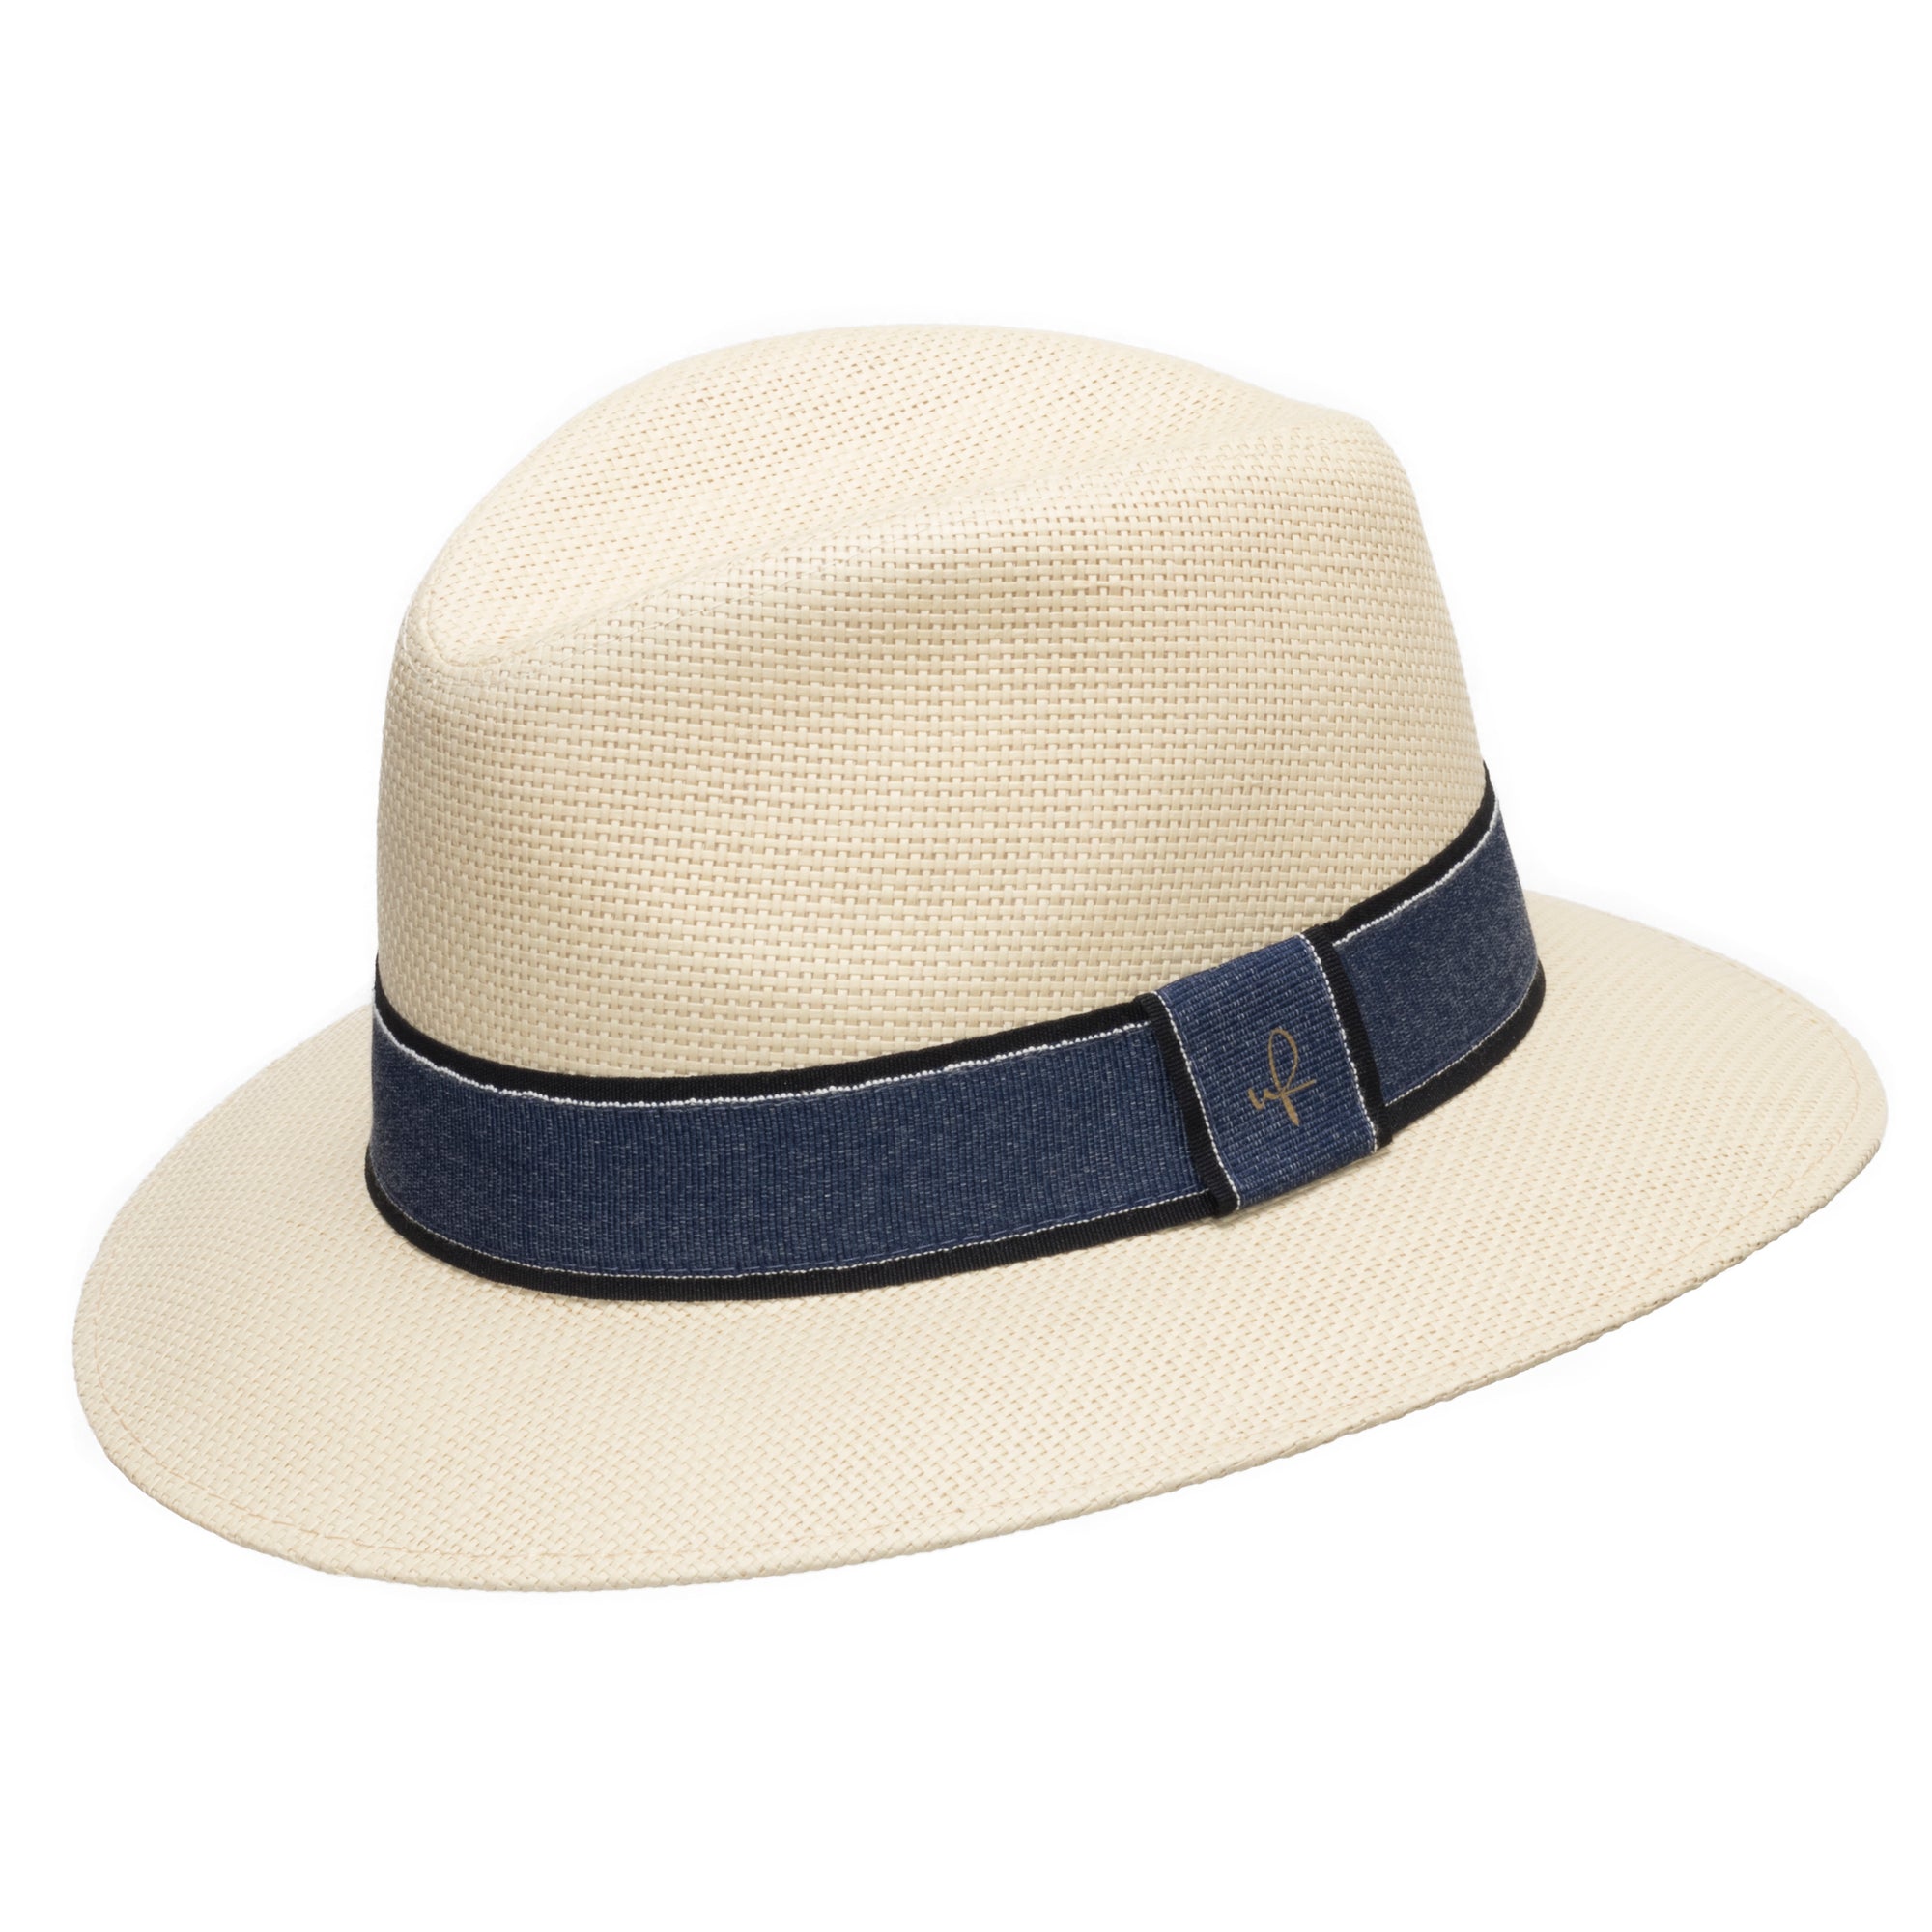 Men's Straw Hats for Sun Protection Online - Ultrafino